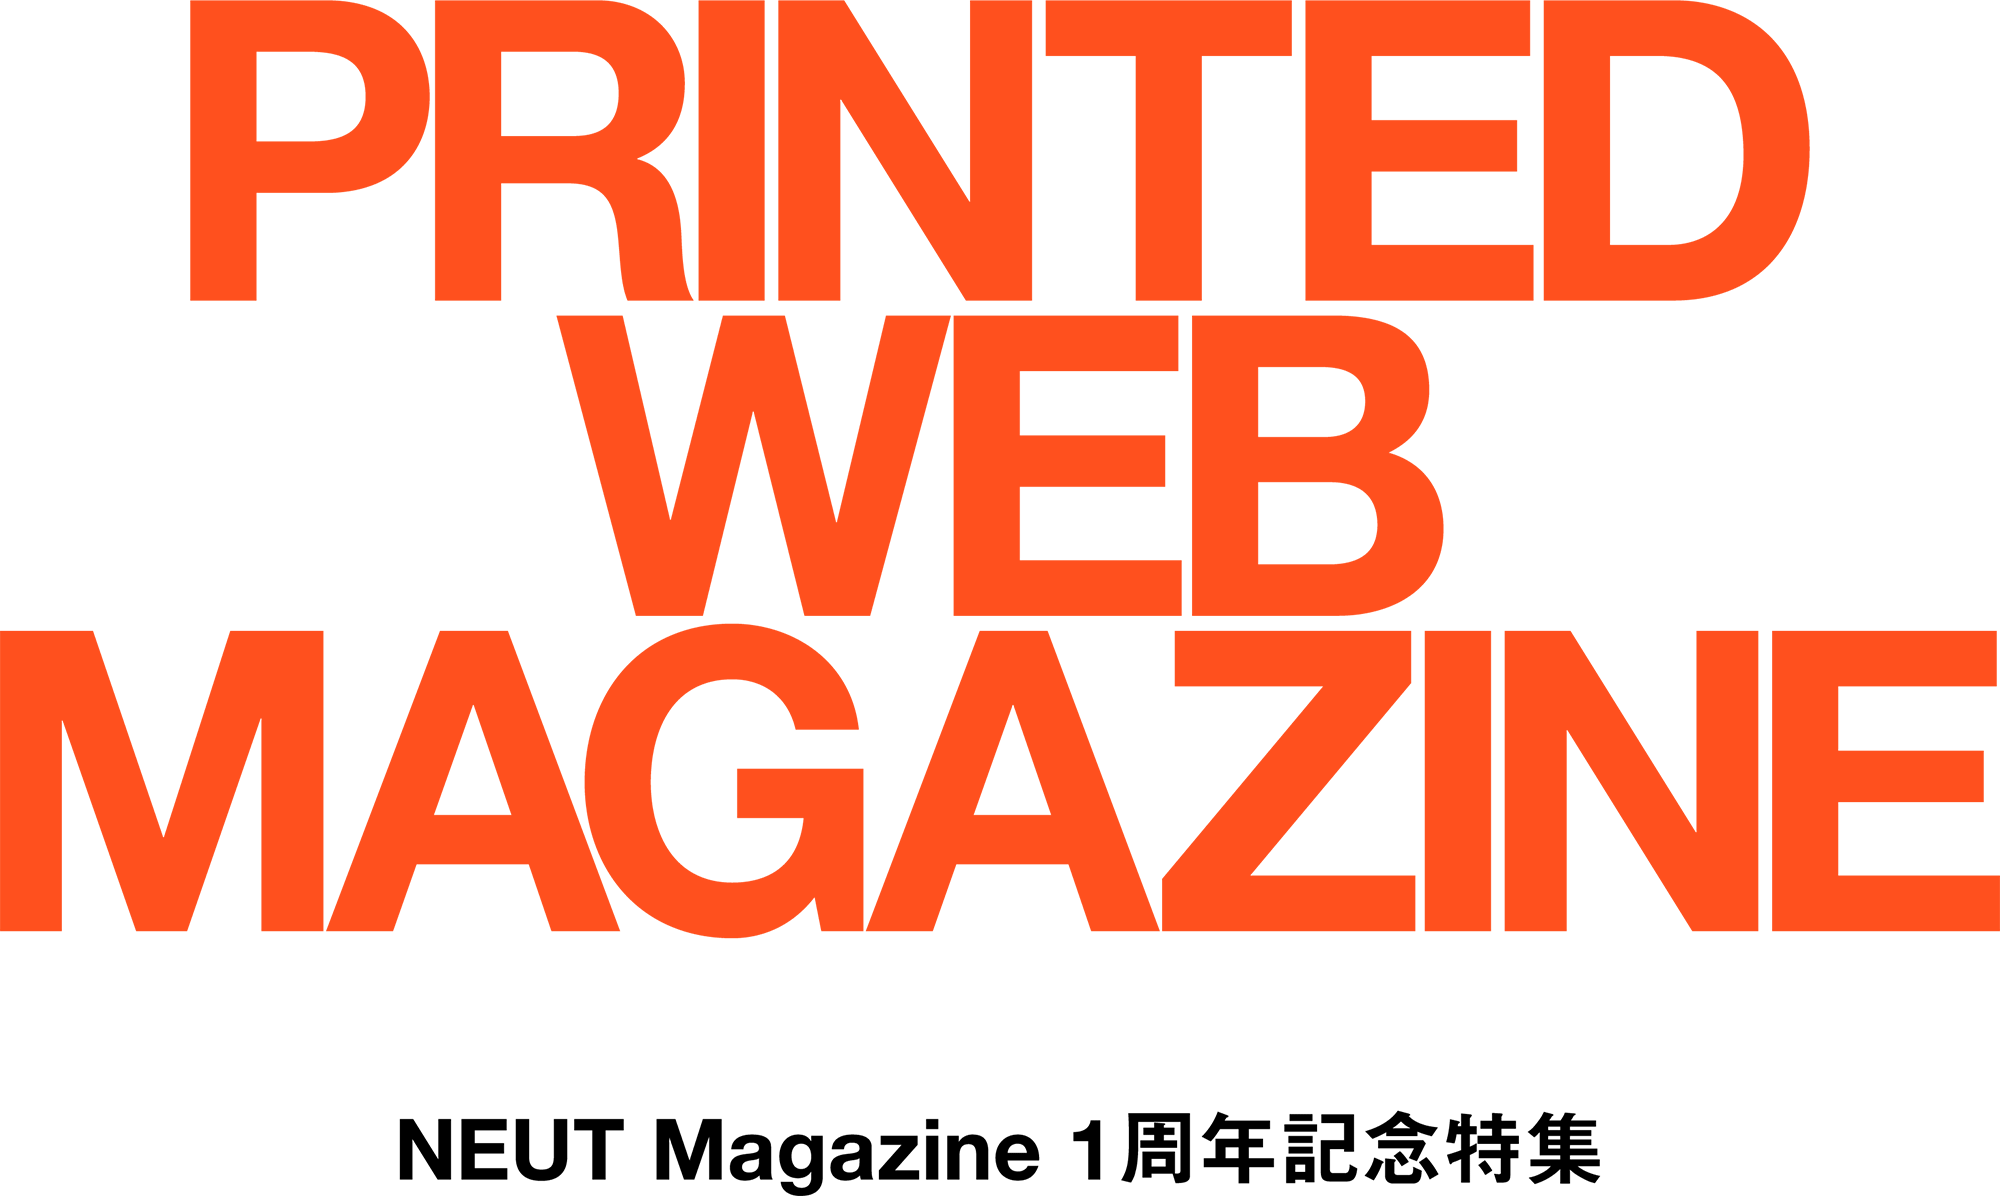 PRINTED WEB MAGAZINE NEUT Magazine １周年記念特集